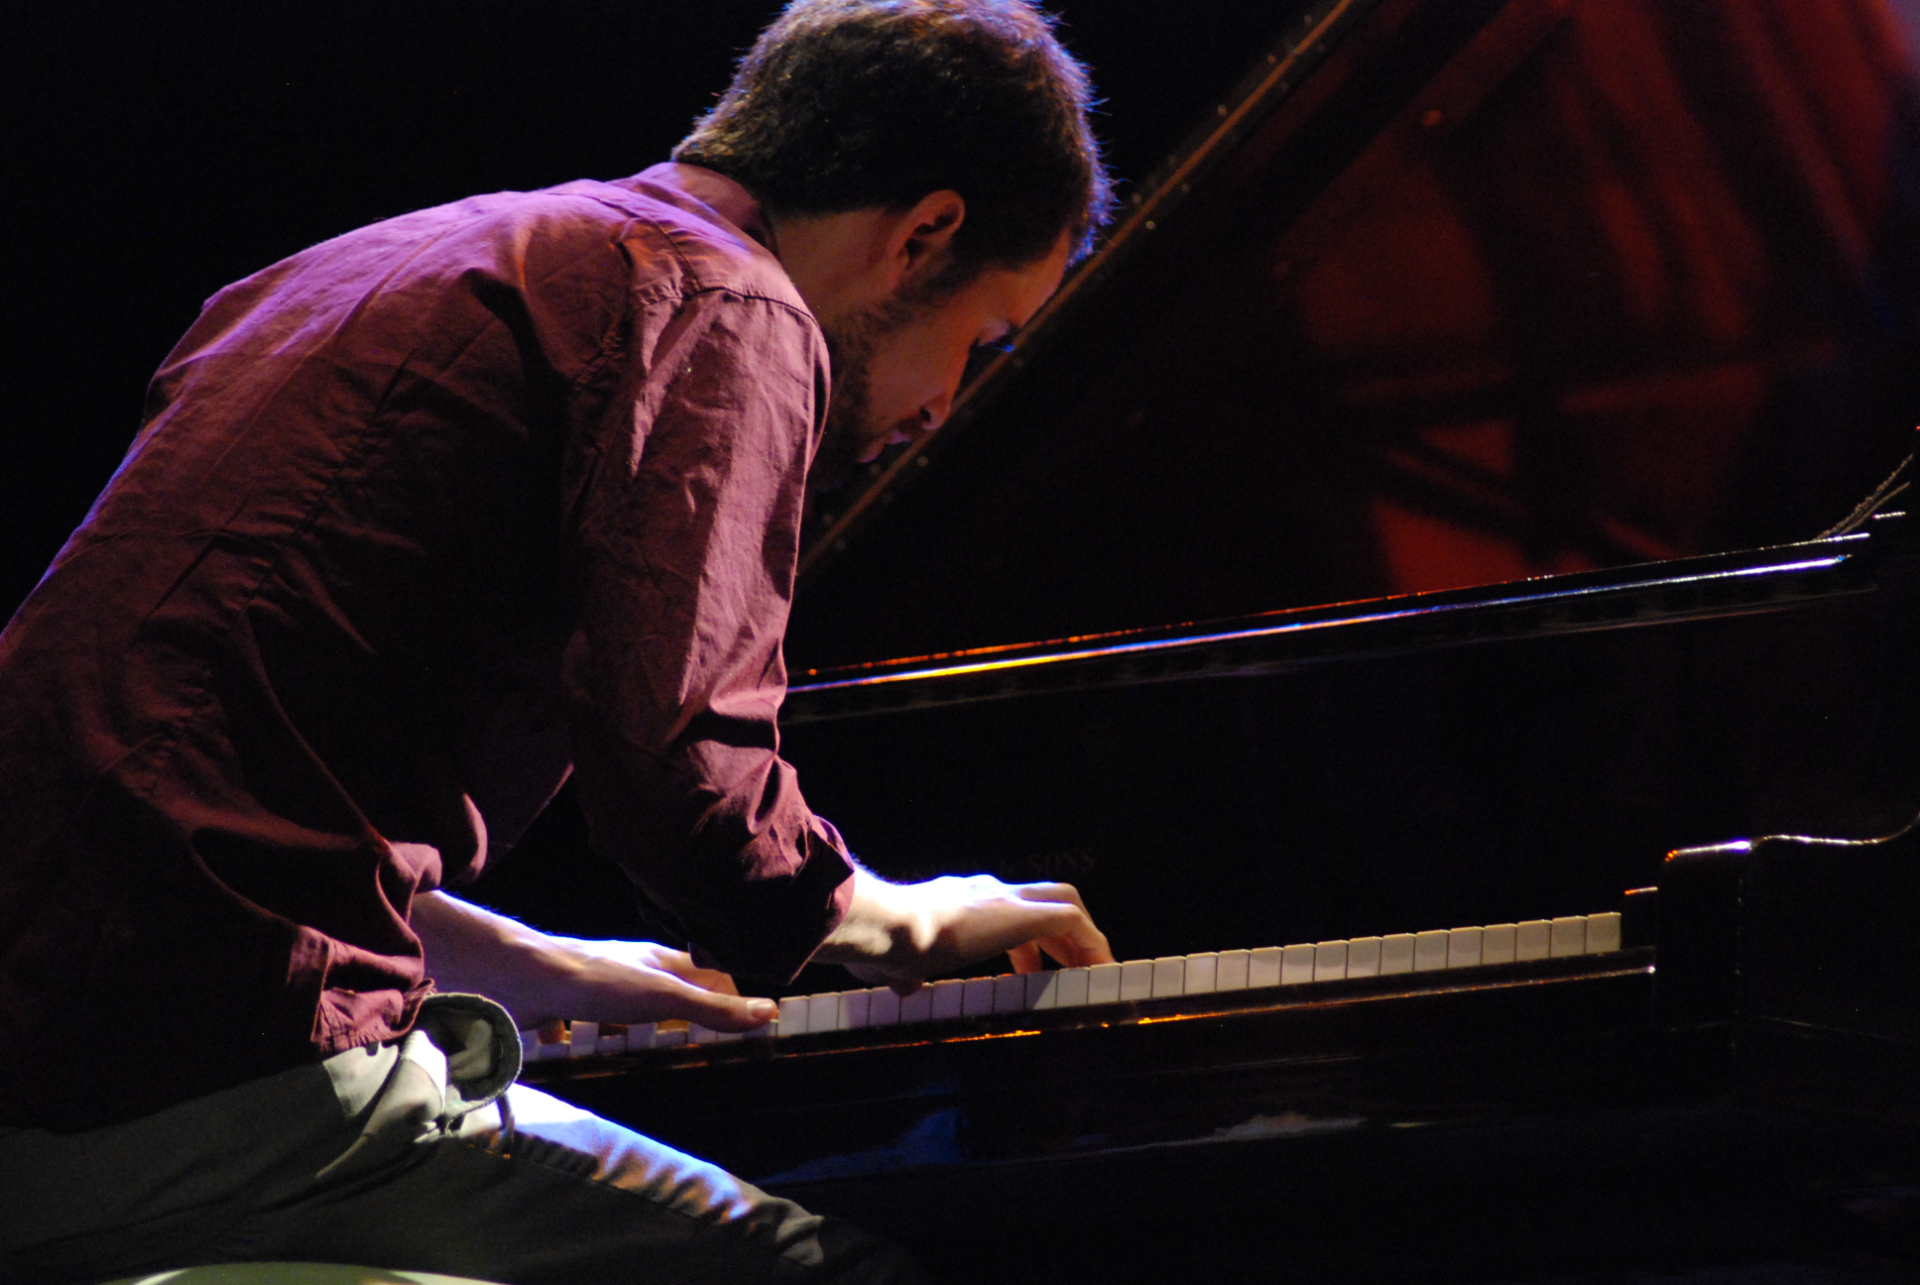 Nitai Hershkovits piano solo